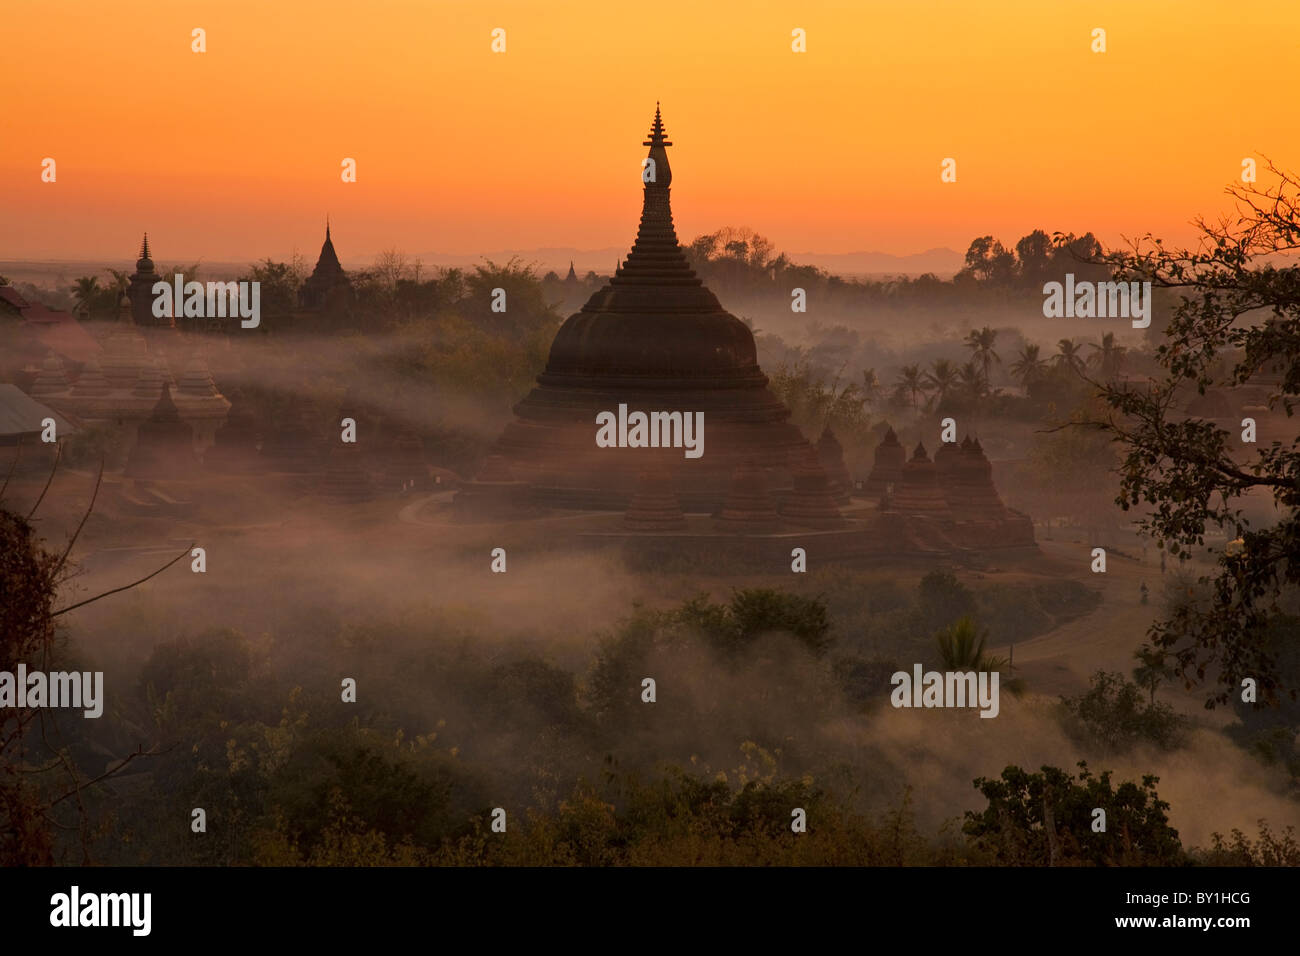 Myanmar, Burma, Mrauk U. Abend Nebel und Rauch vom Dorf kochen Brände wirbeln herum Ratanabon Paya, Mrauk U, Rakhine-Staat. Stockfoto